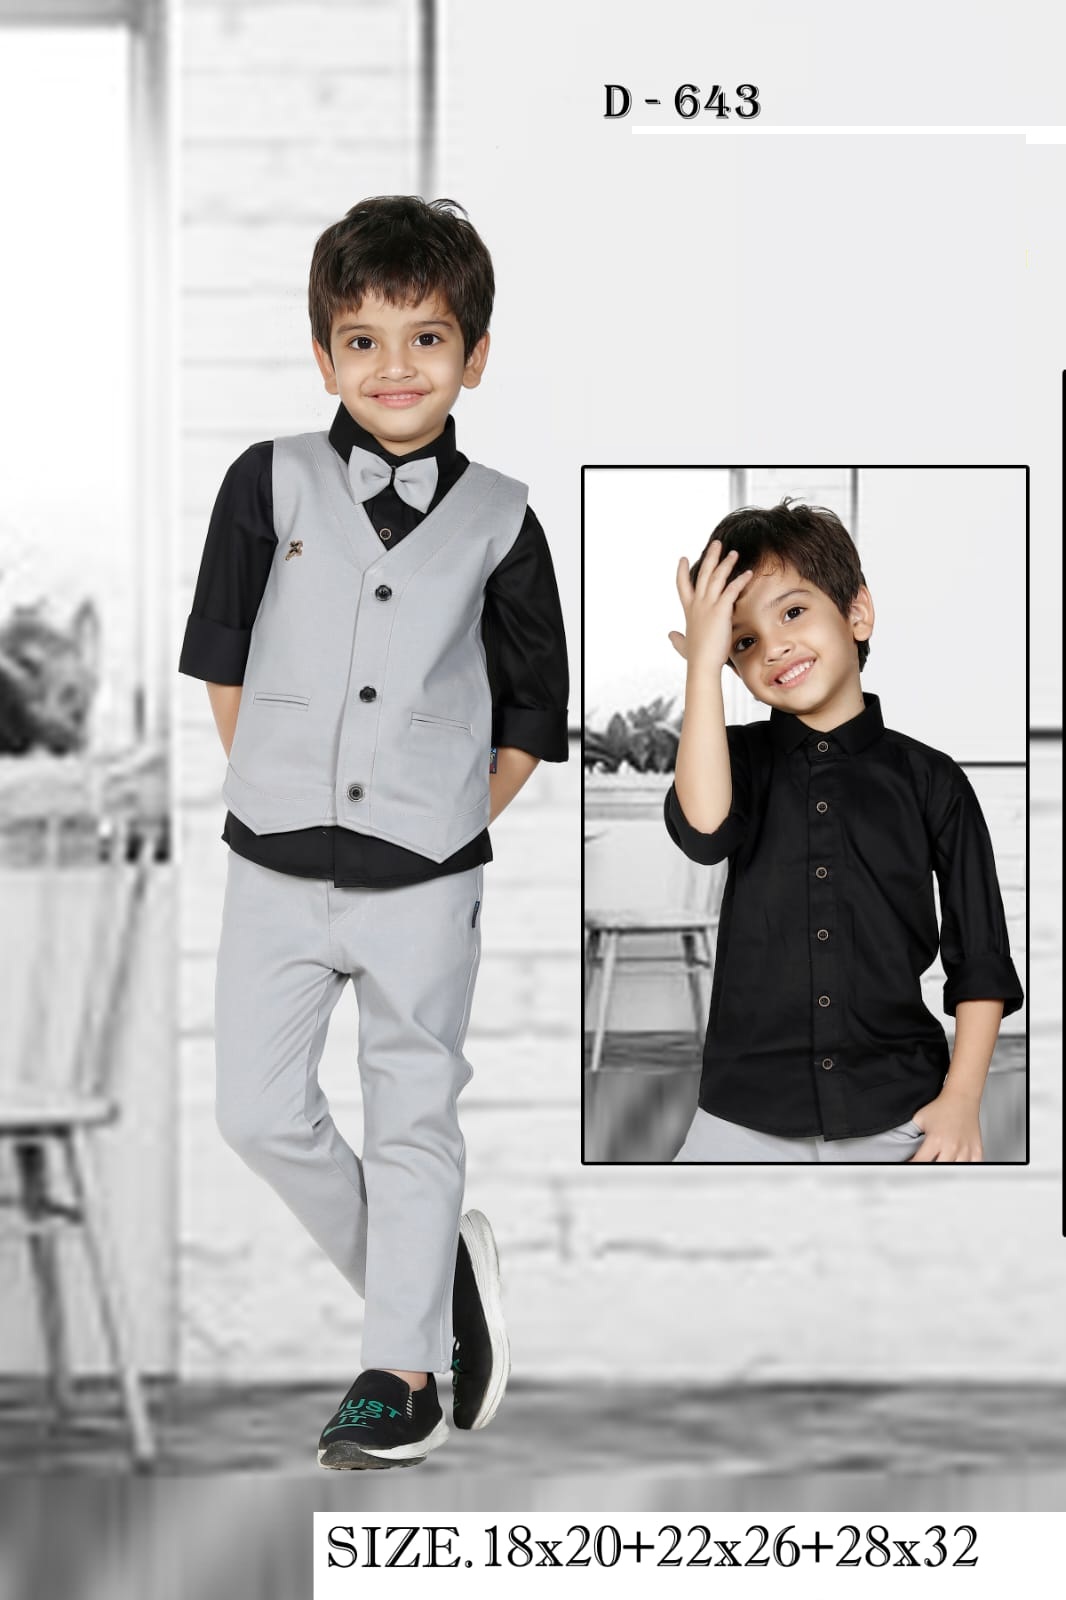 Aunavey Toddler Baby Boys Gentleman Formal Suit Shirt with Tie Pants Set  Baptism Christening Outfit - Walmart.com